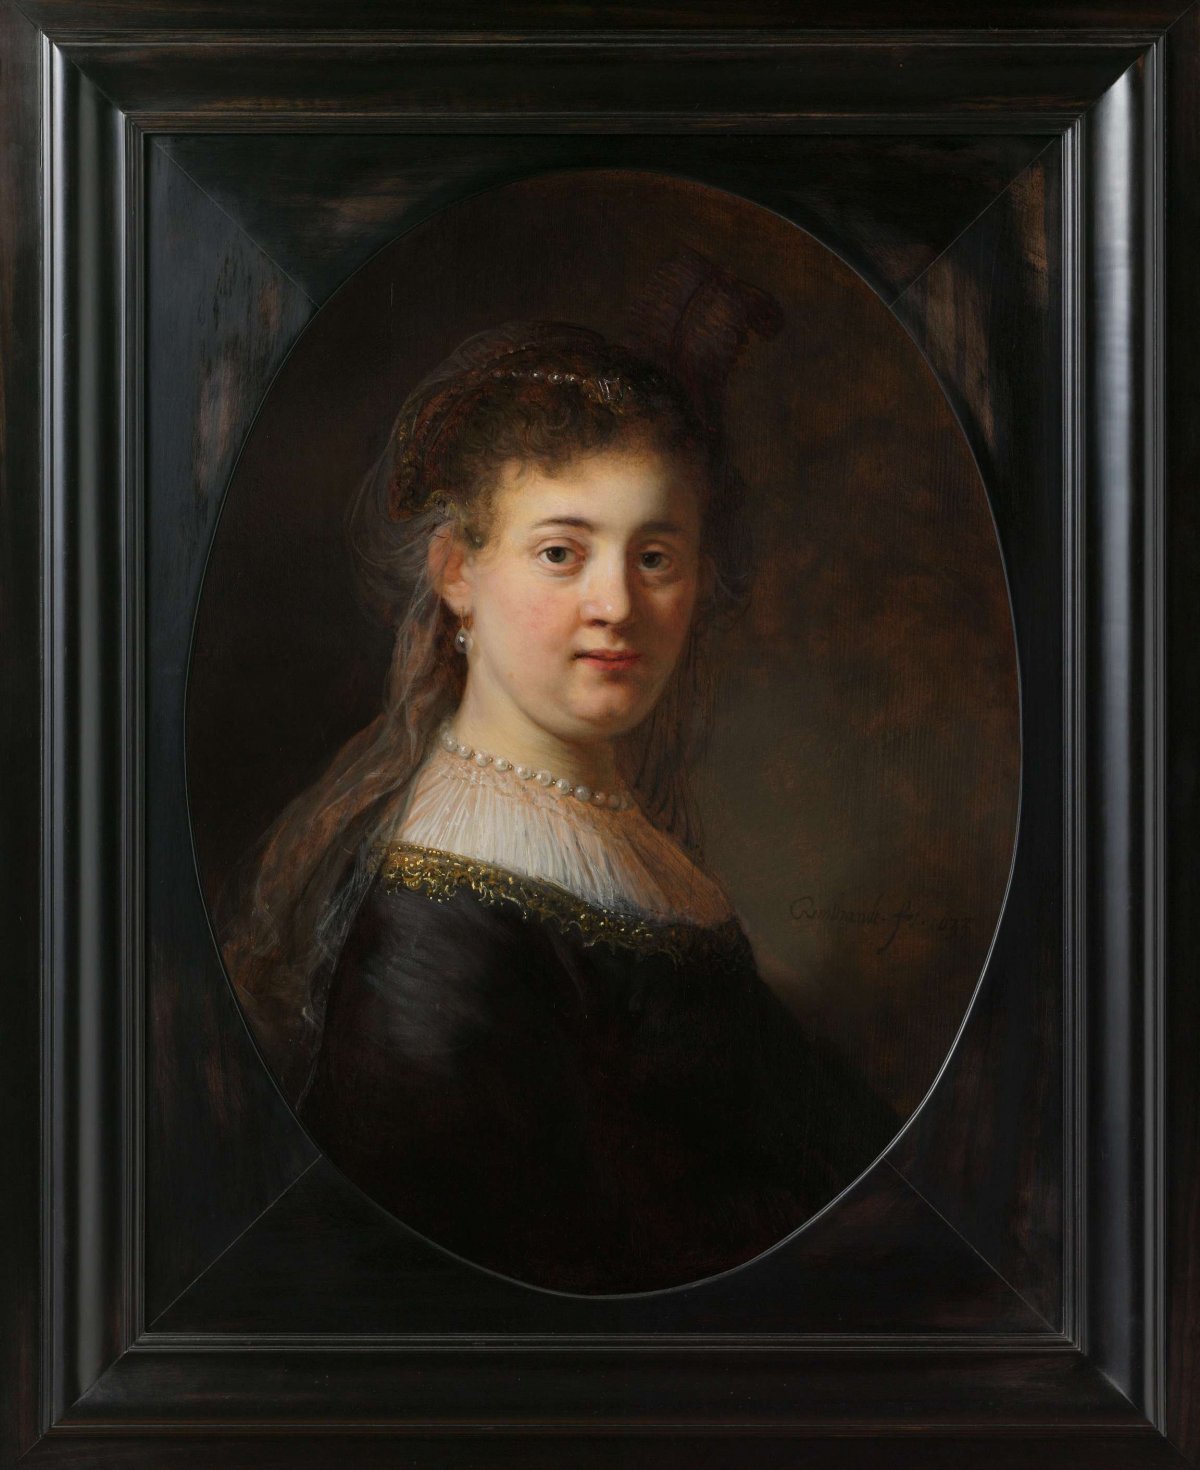 Young Woman in Fantasy Costume, Rembrandt van Rijn, 1633